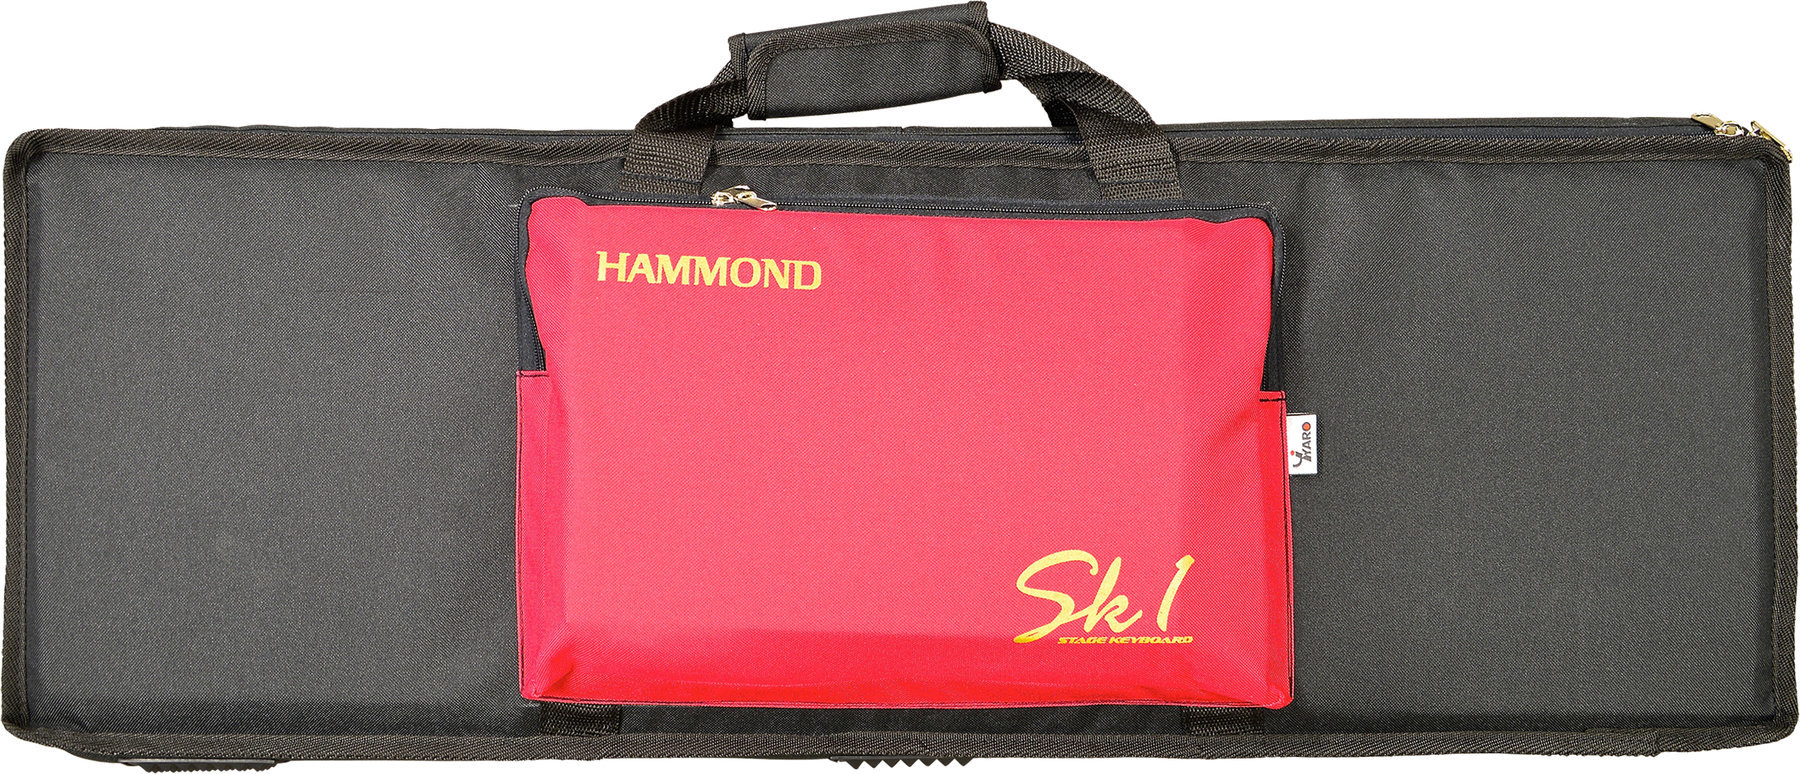 Housse pour clavier Hammond Softbag SK1